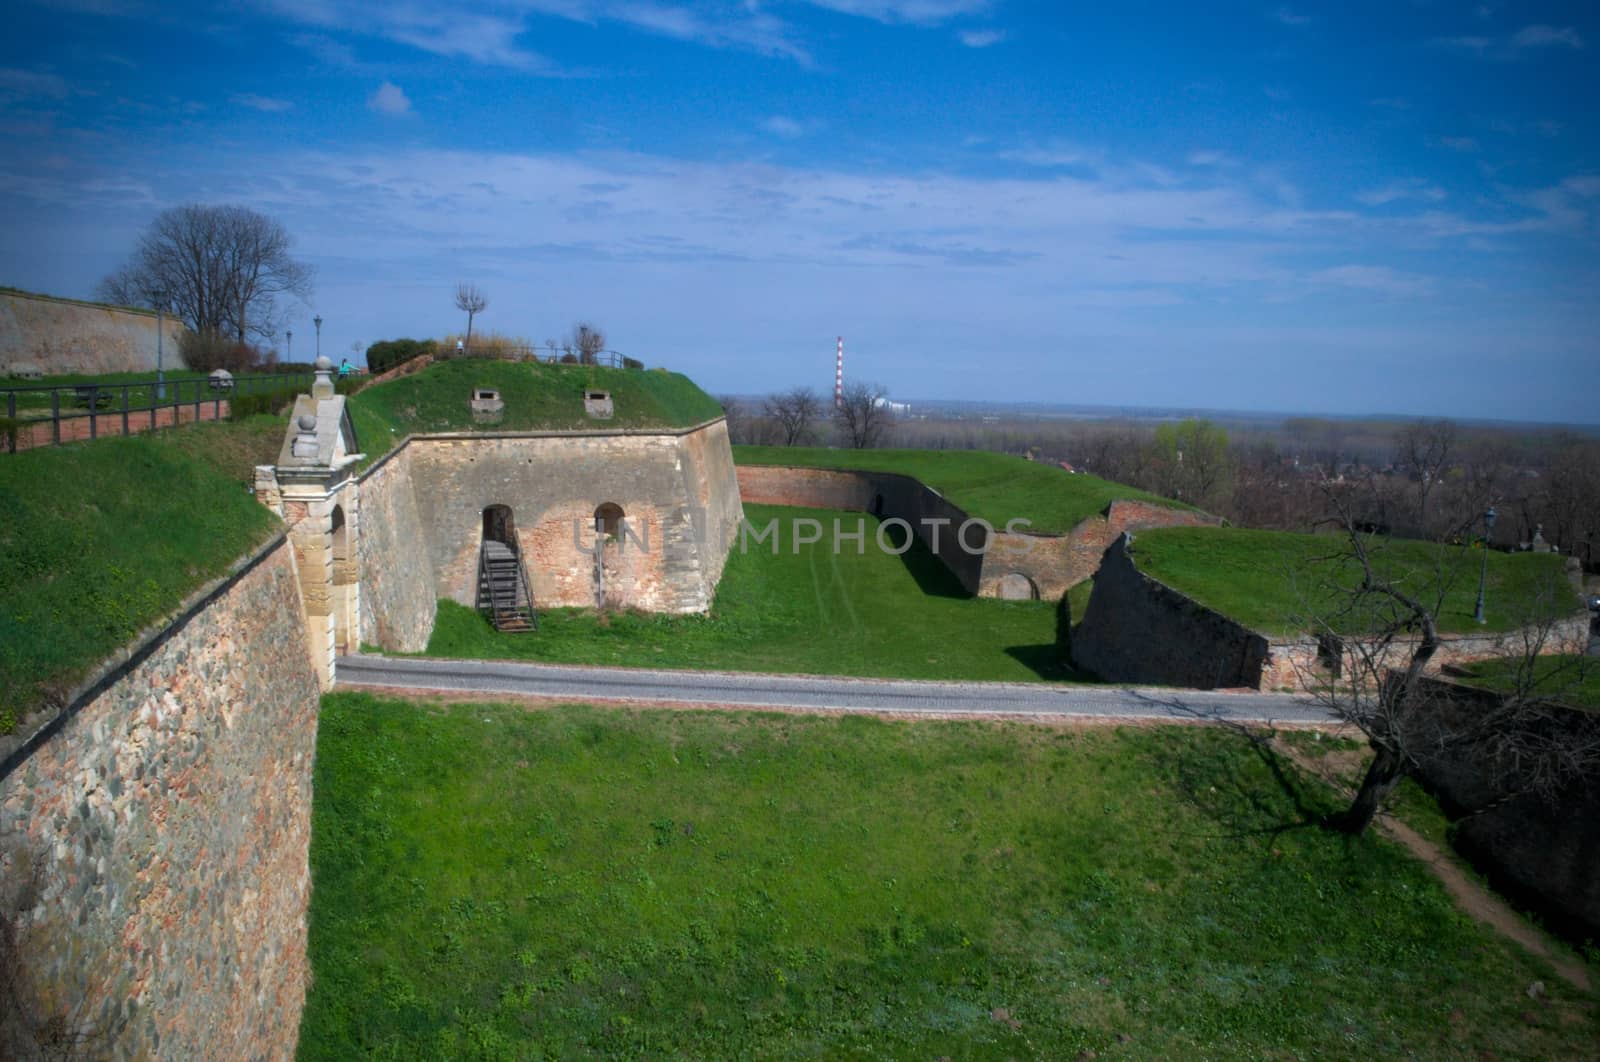 Landscape at Petrovaradin fortress, Serbia by sheriffkule